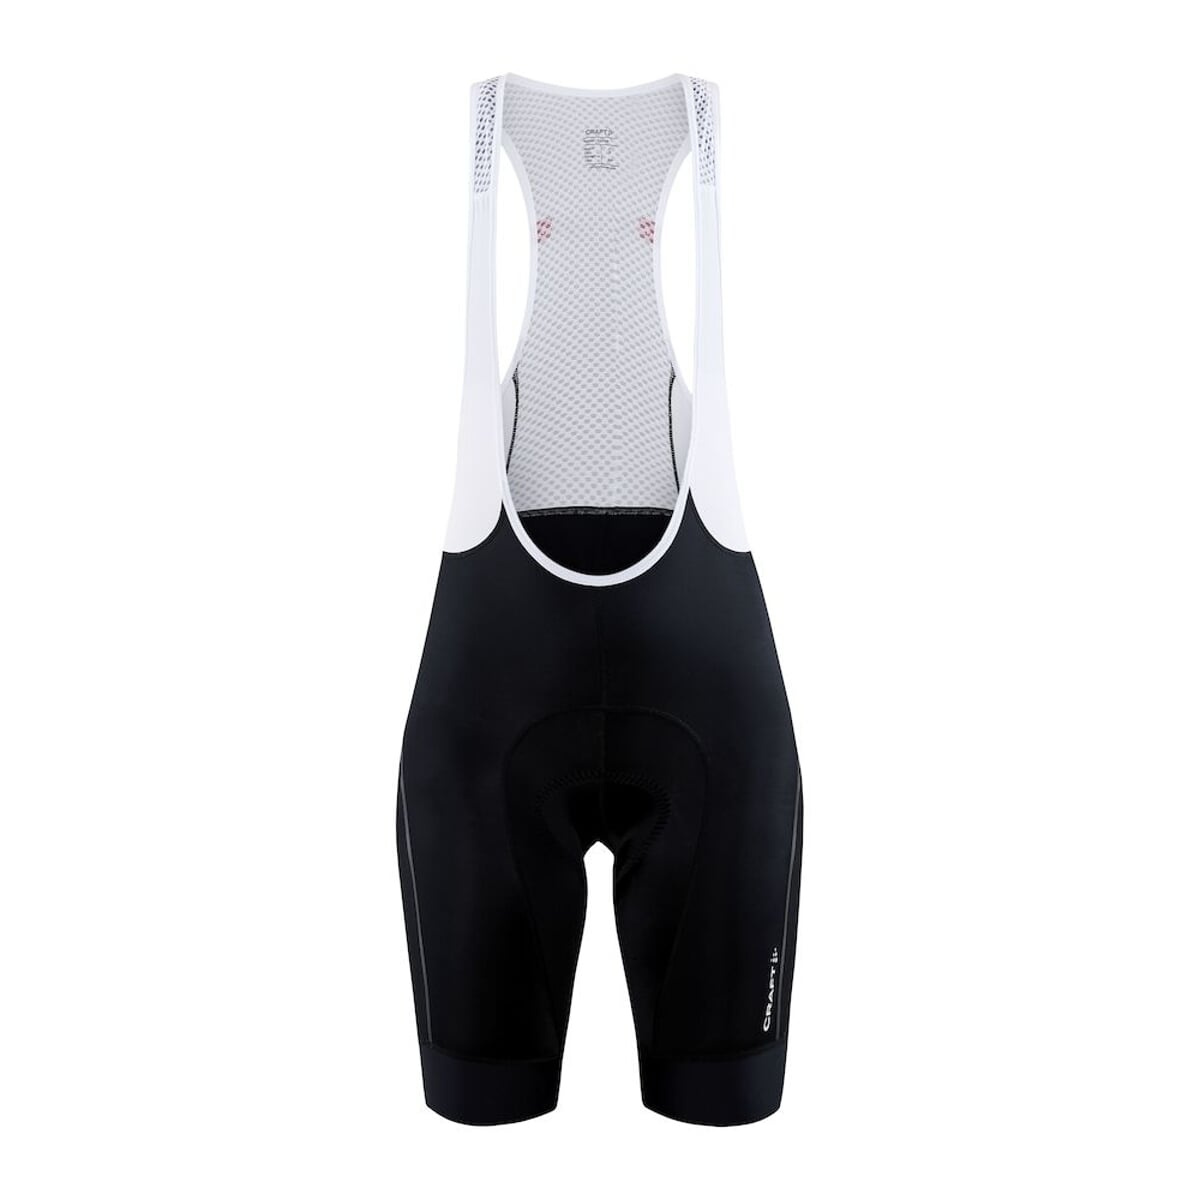 Dámské krátké cyklistické kalhoty se šlemi CRAFT ADV Endur Bib černá/bílá XL